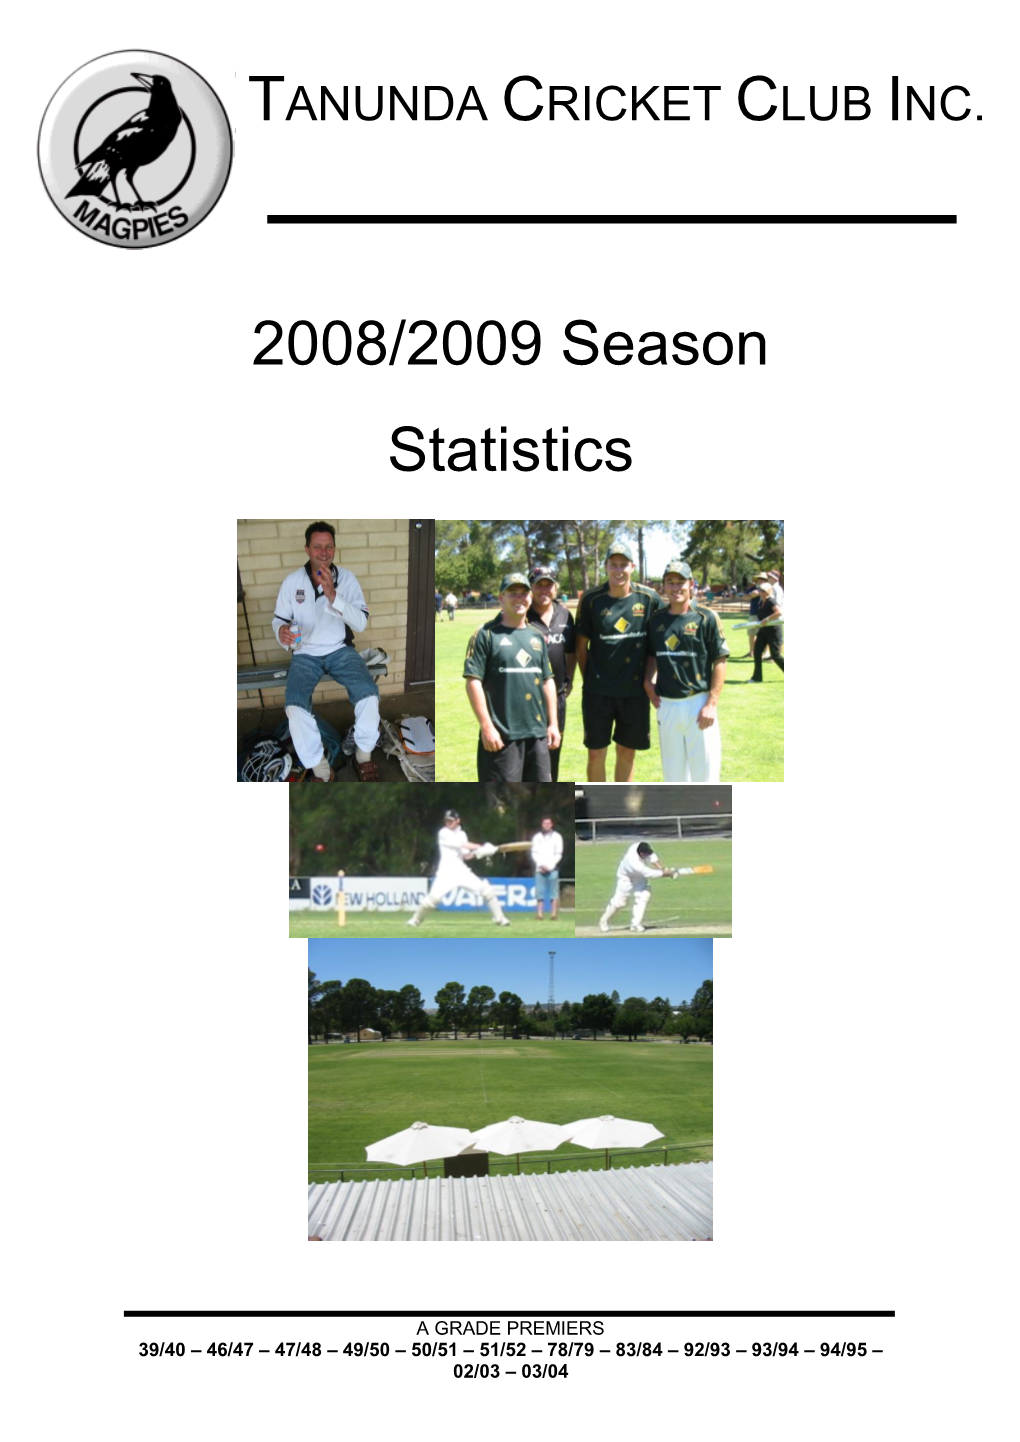 2008/2009 Season Statistics